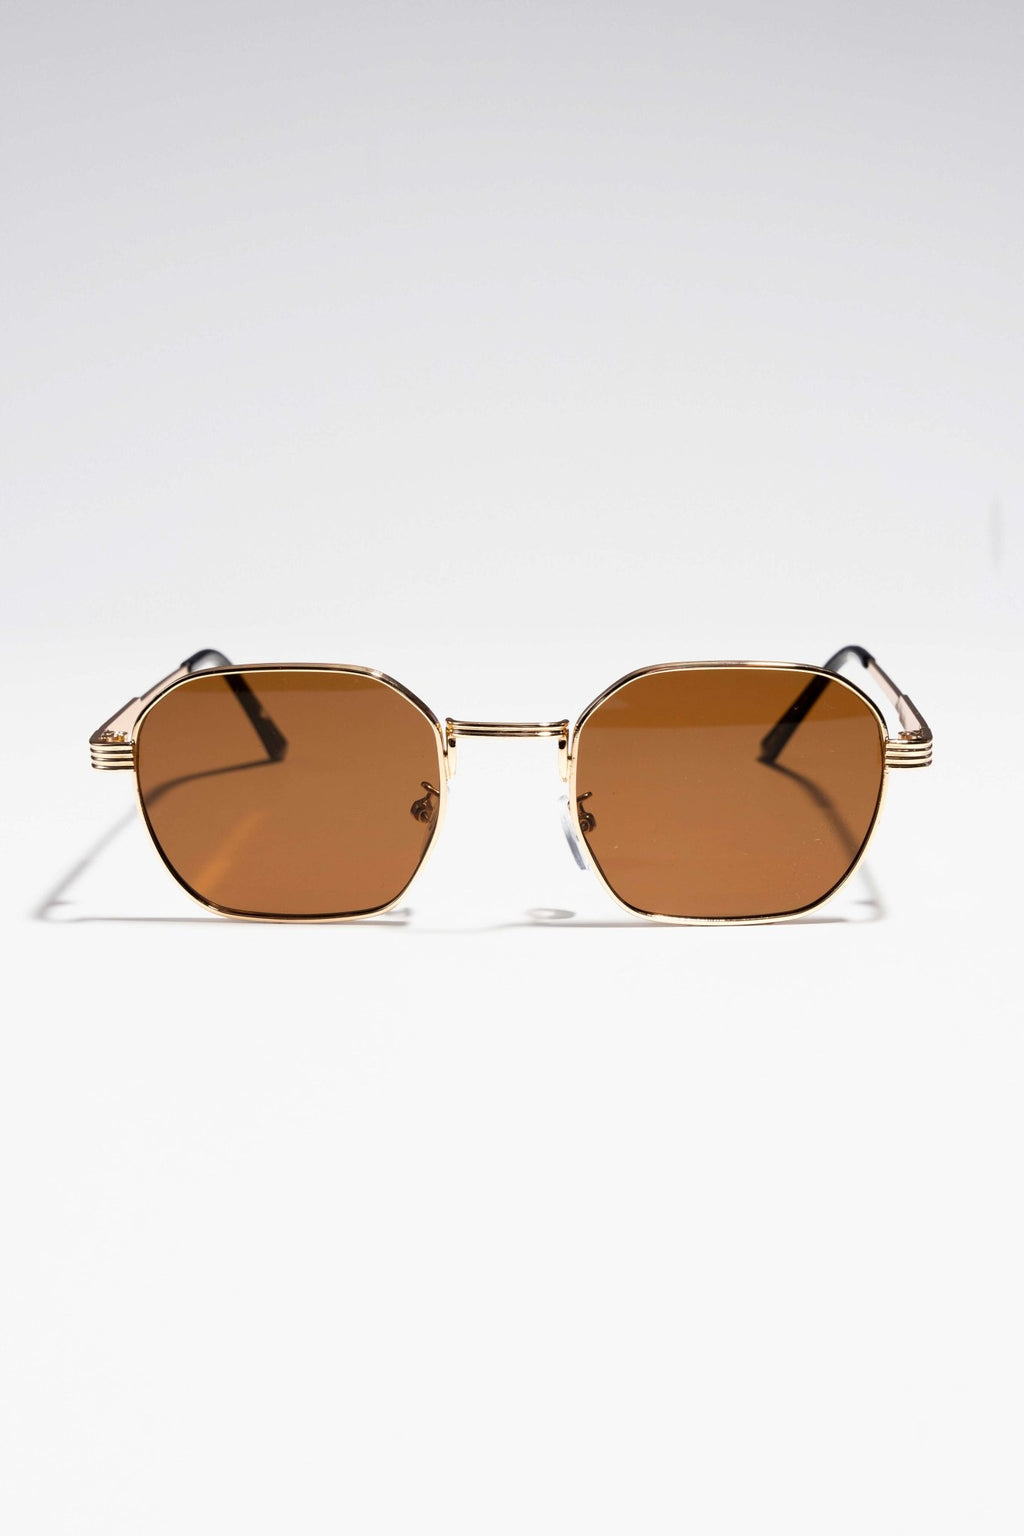 Damian Sunglasses - Gold/Brown